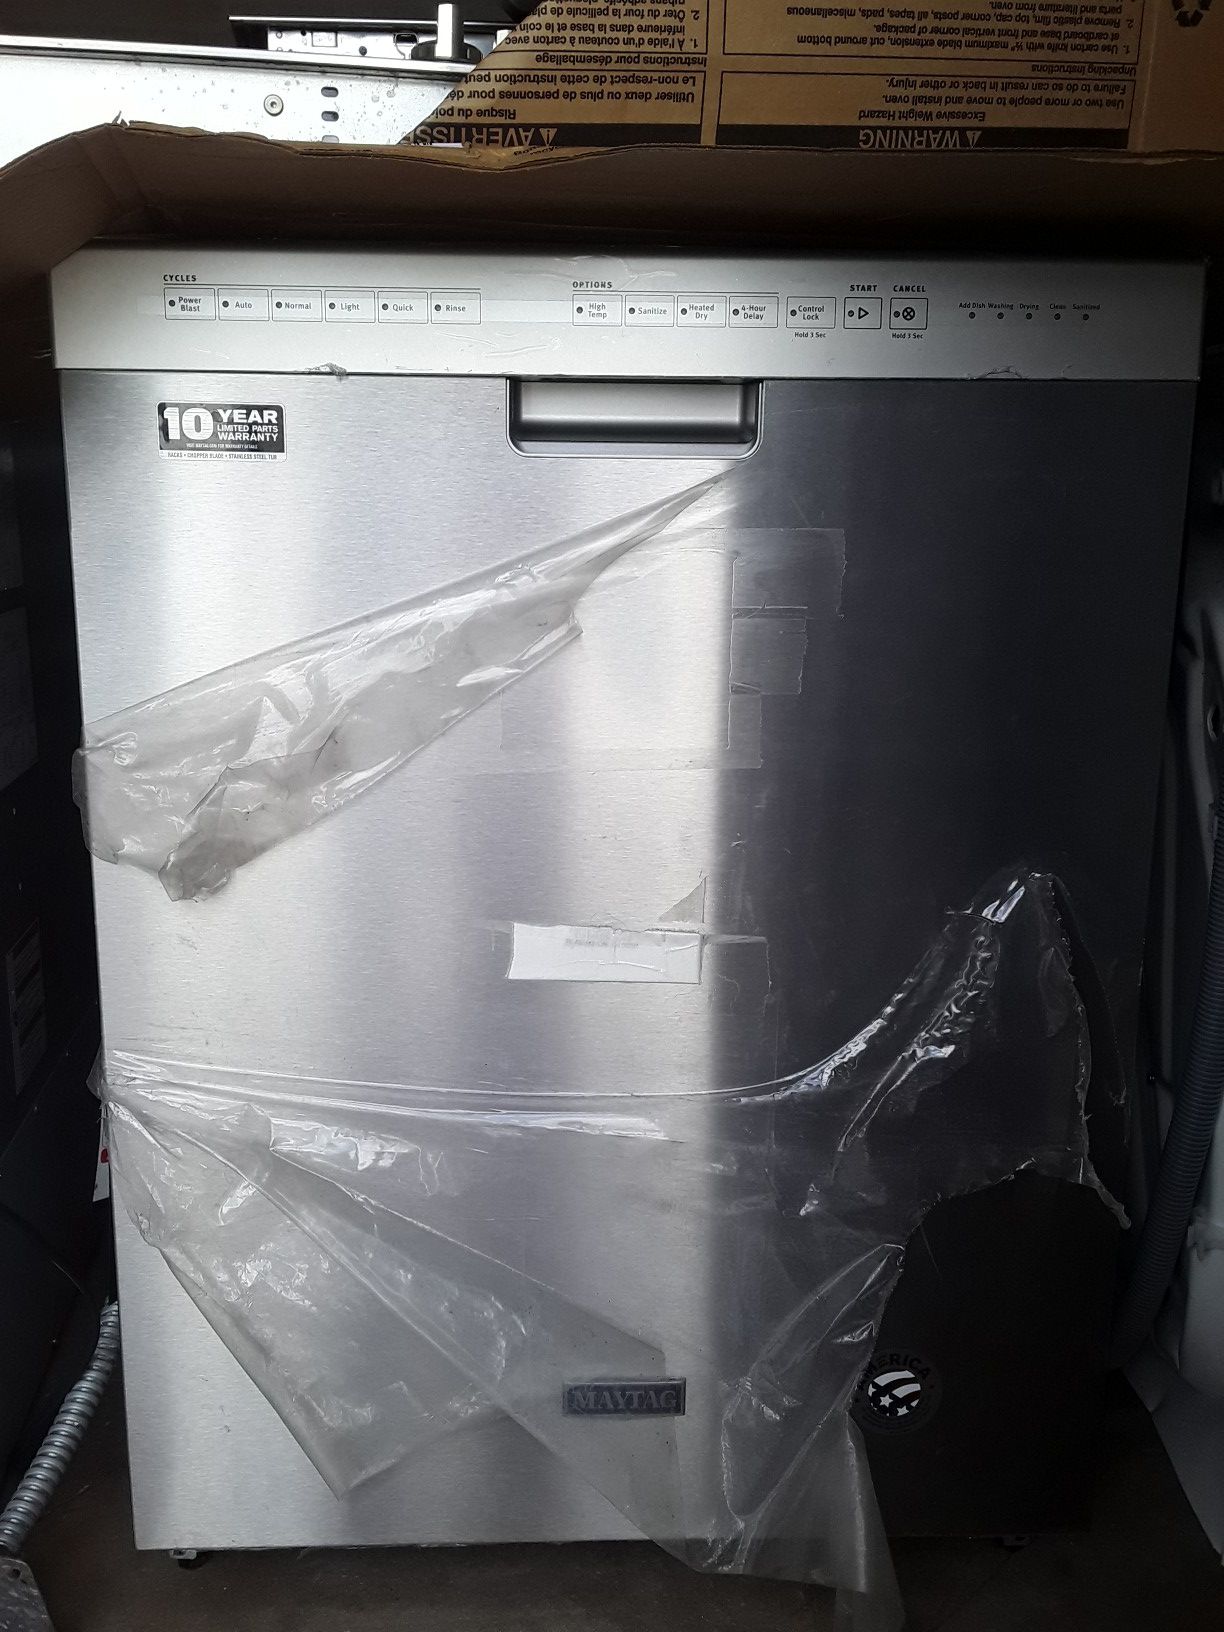 Dishwasher machine maytag brand new stainless steel